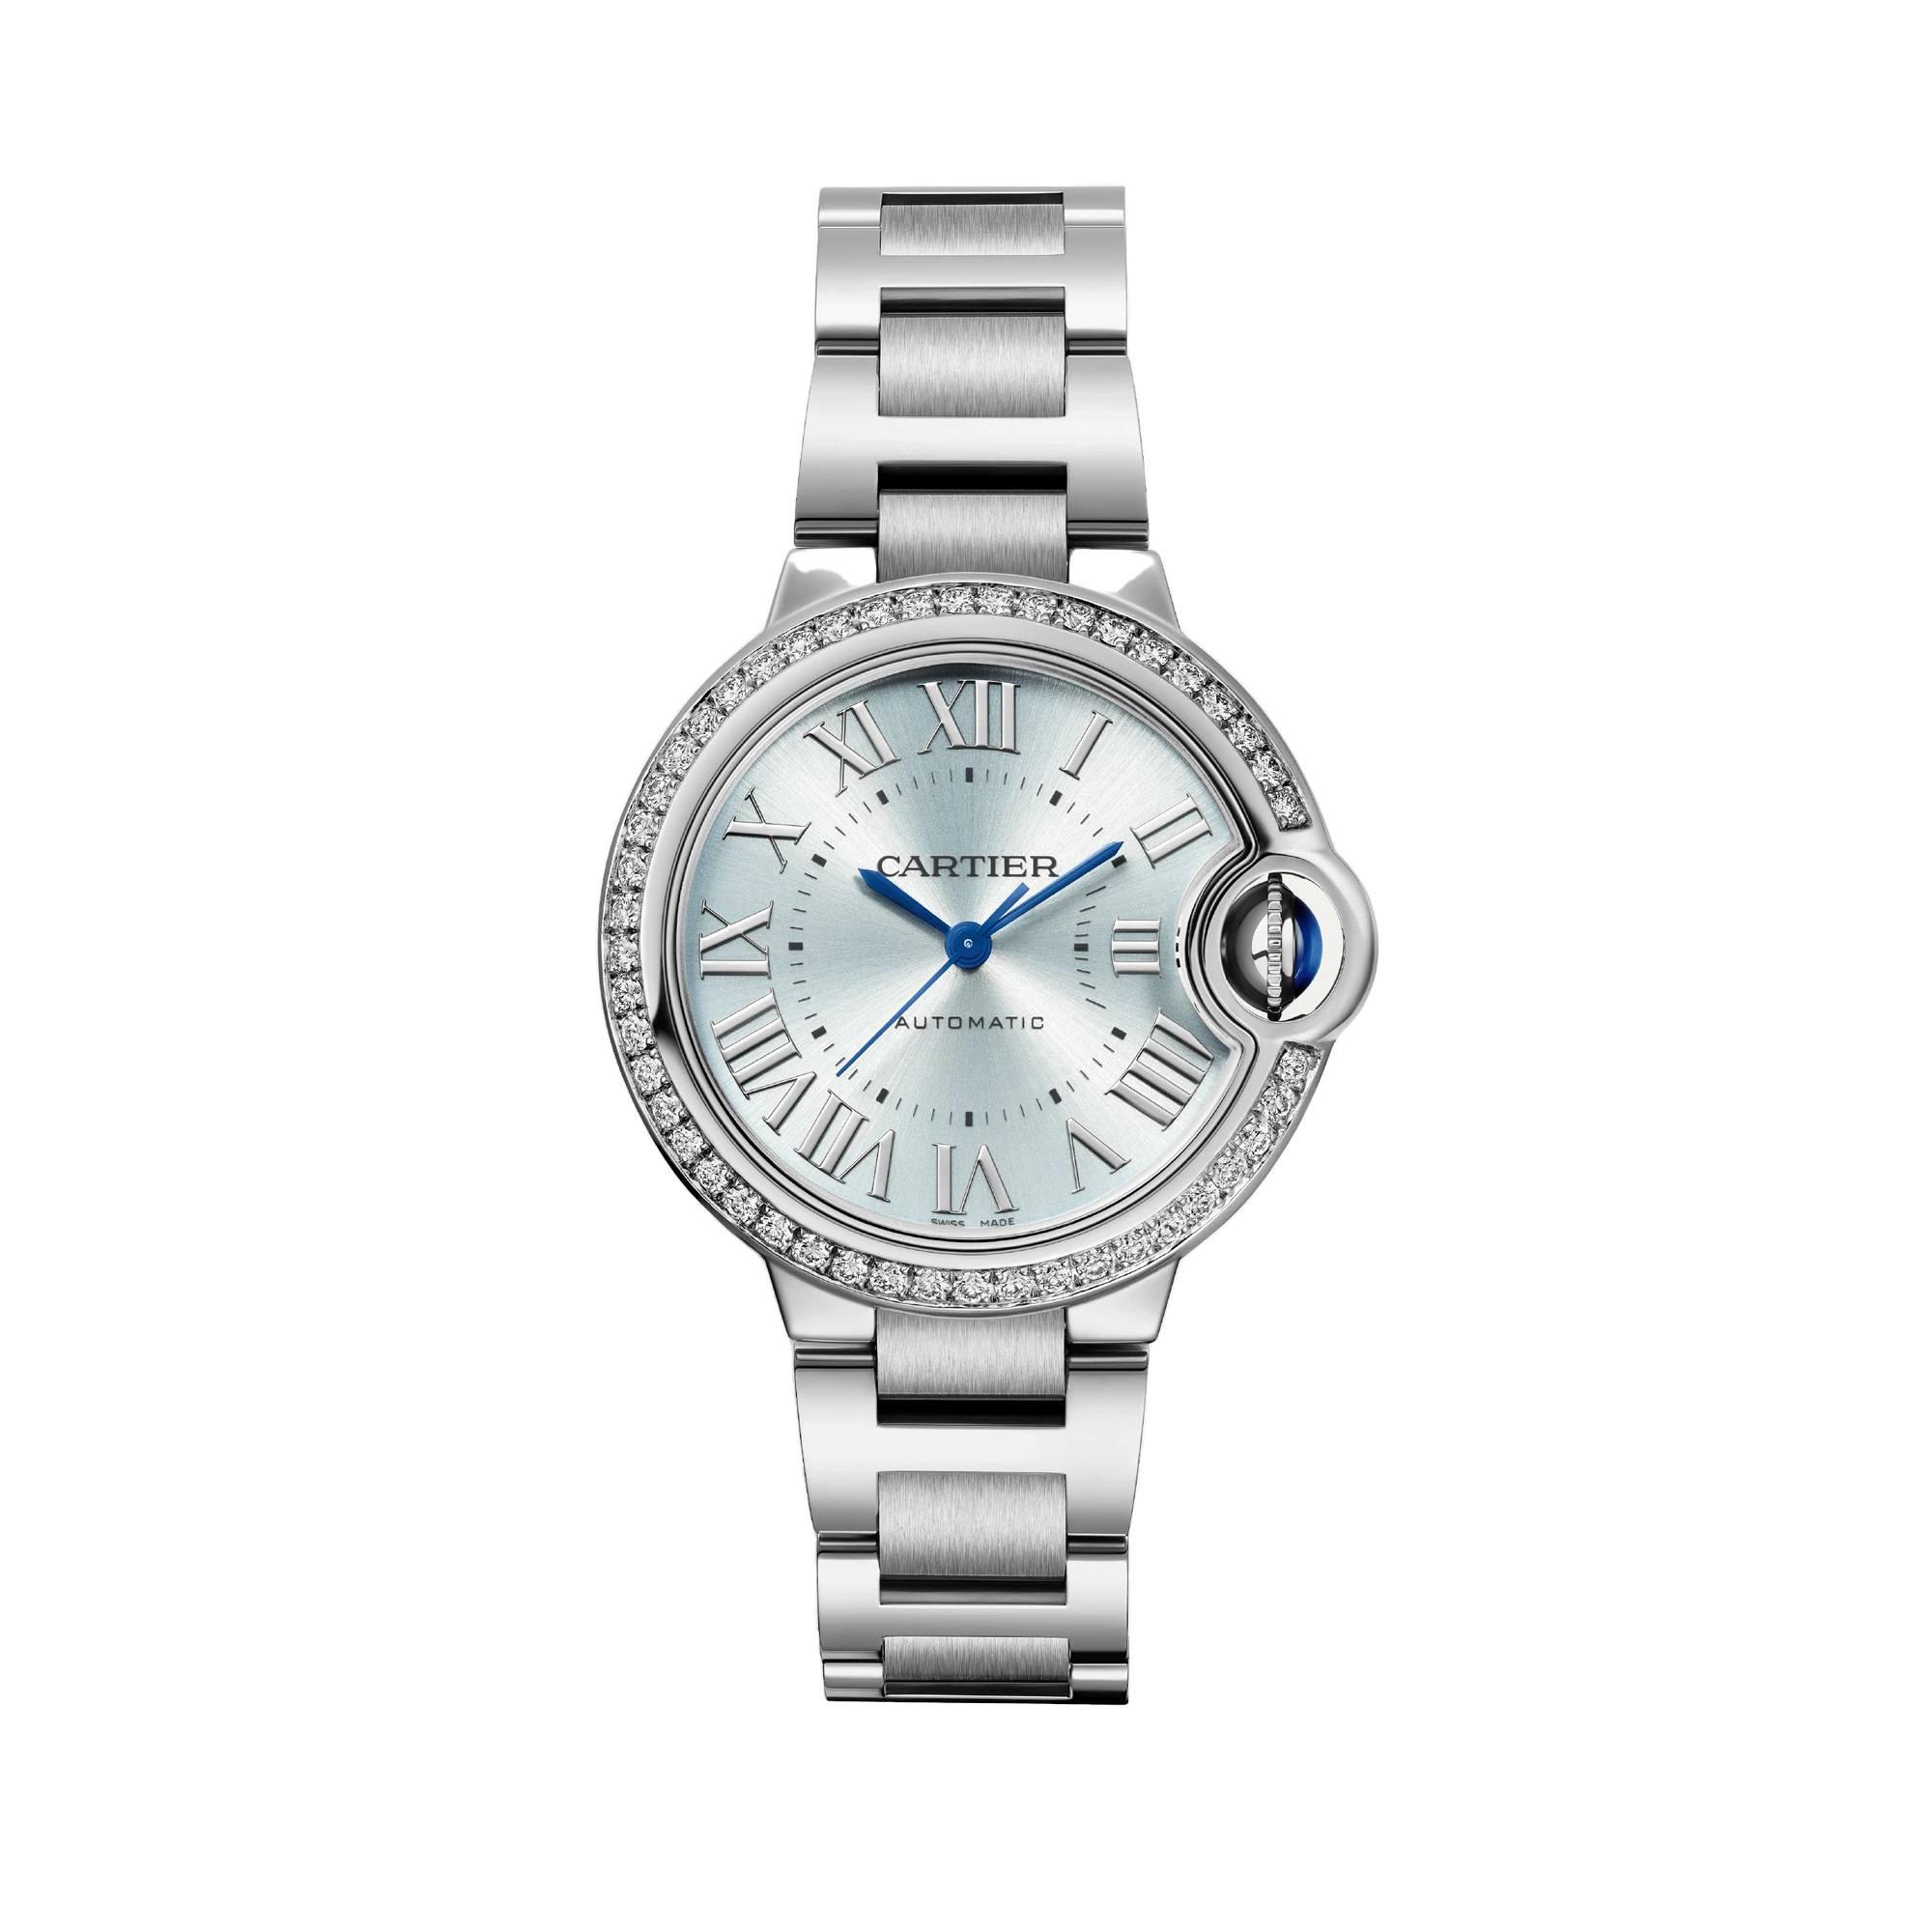 Ballon Bleu de Cartier Watch, Blue Silvered Sunray-Brushed Dial with Diamonds, 33mm 1